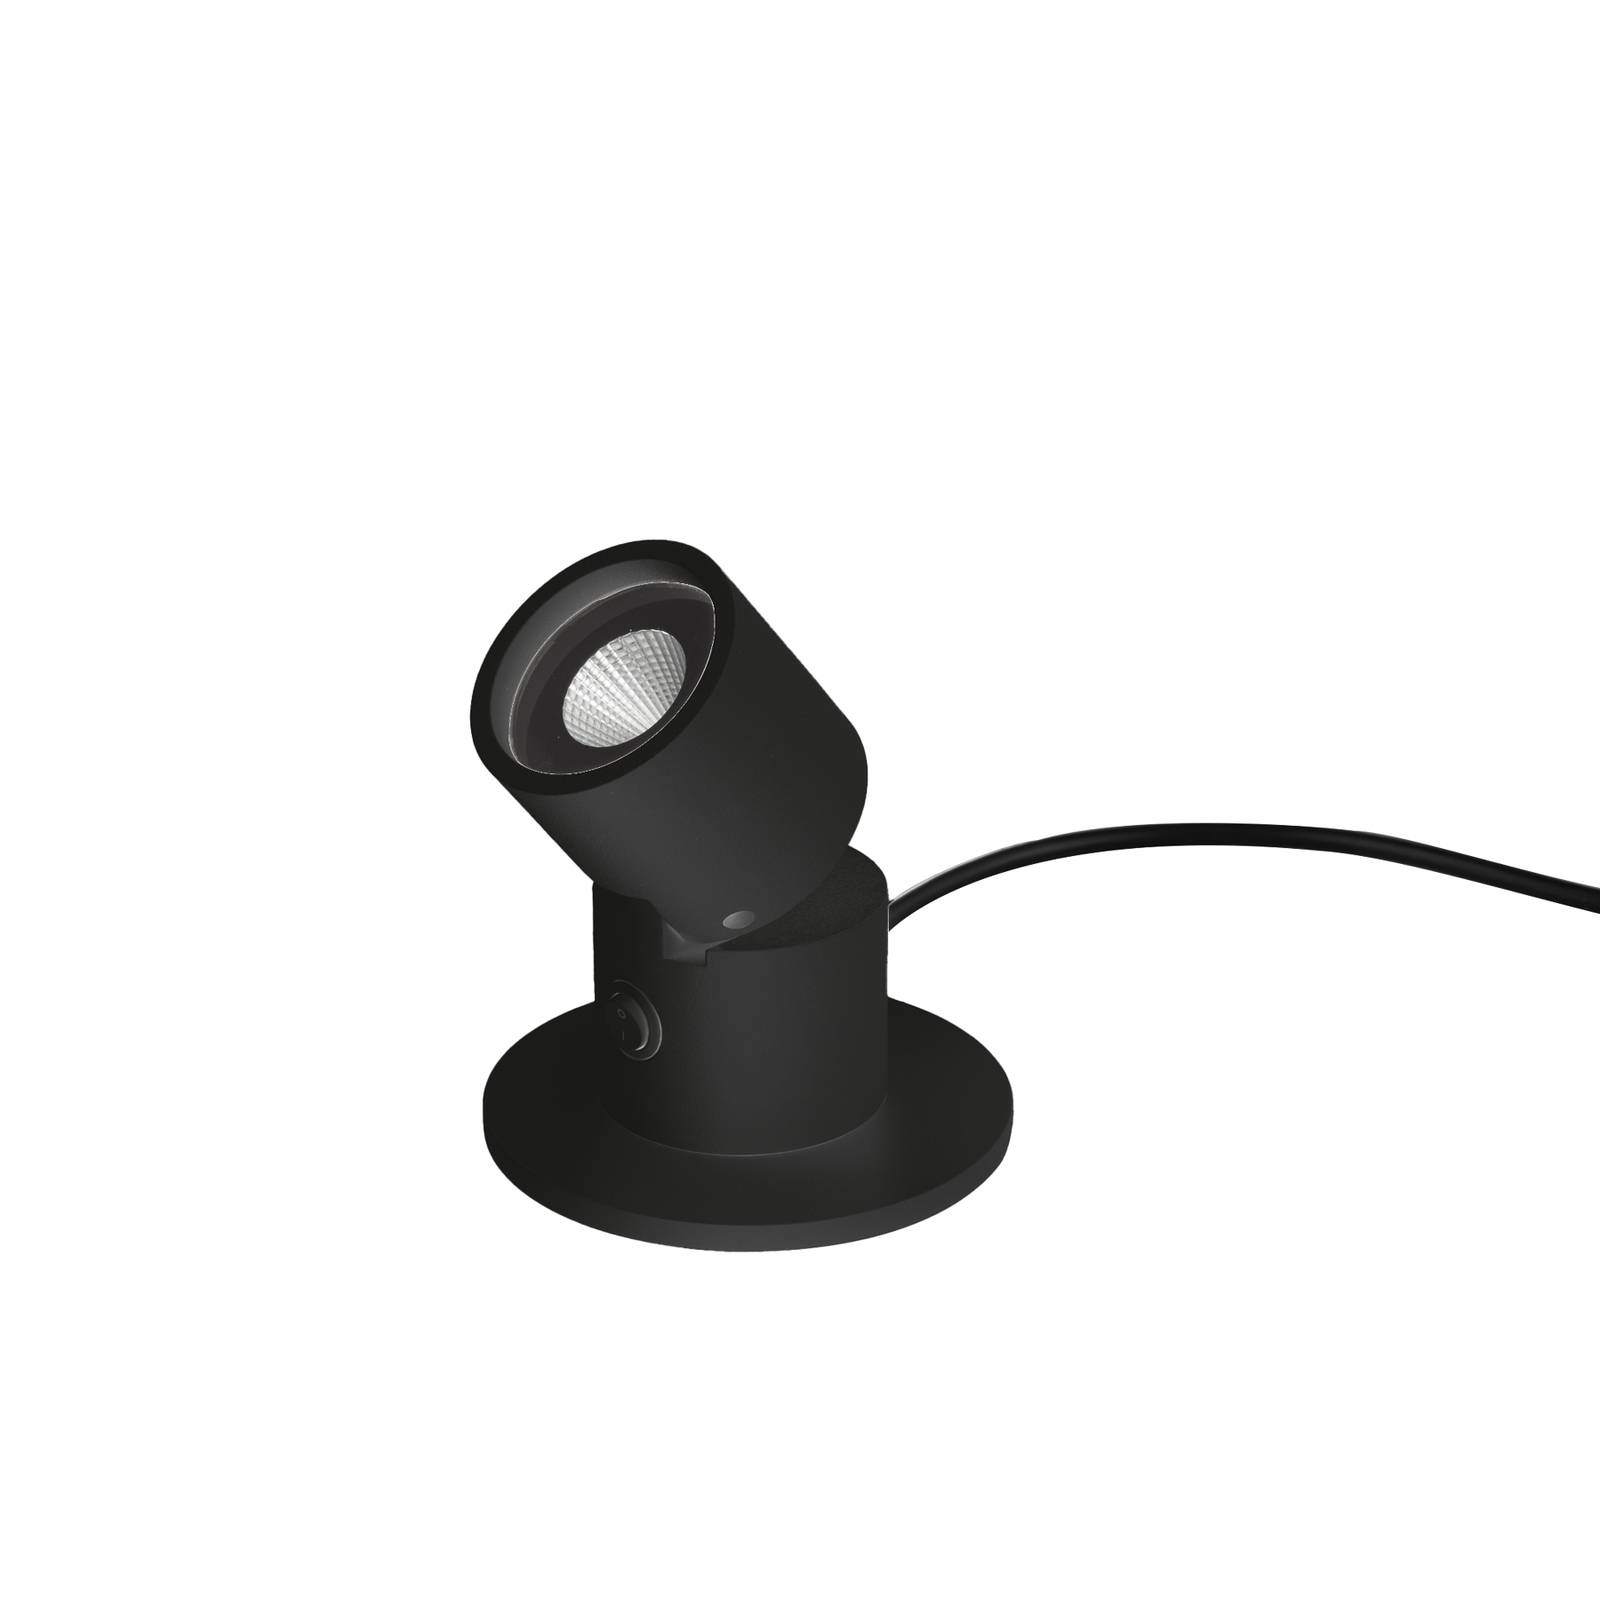 Image of Egger Capri lampe à poser LED avec spot, noire 